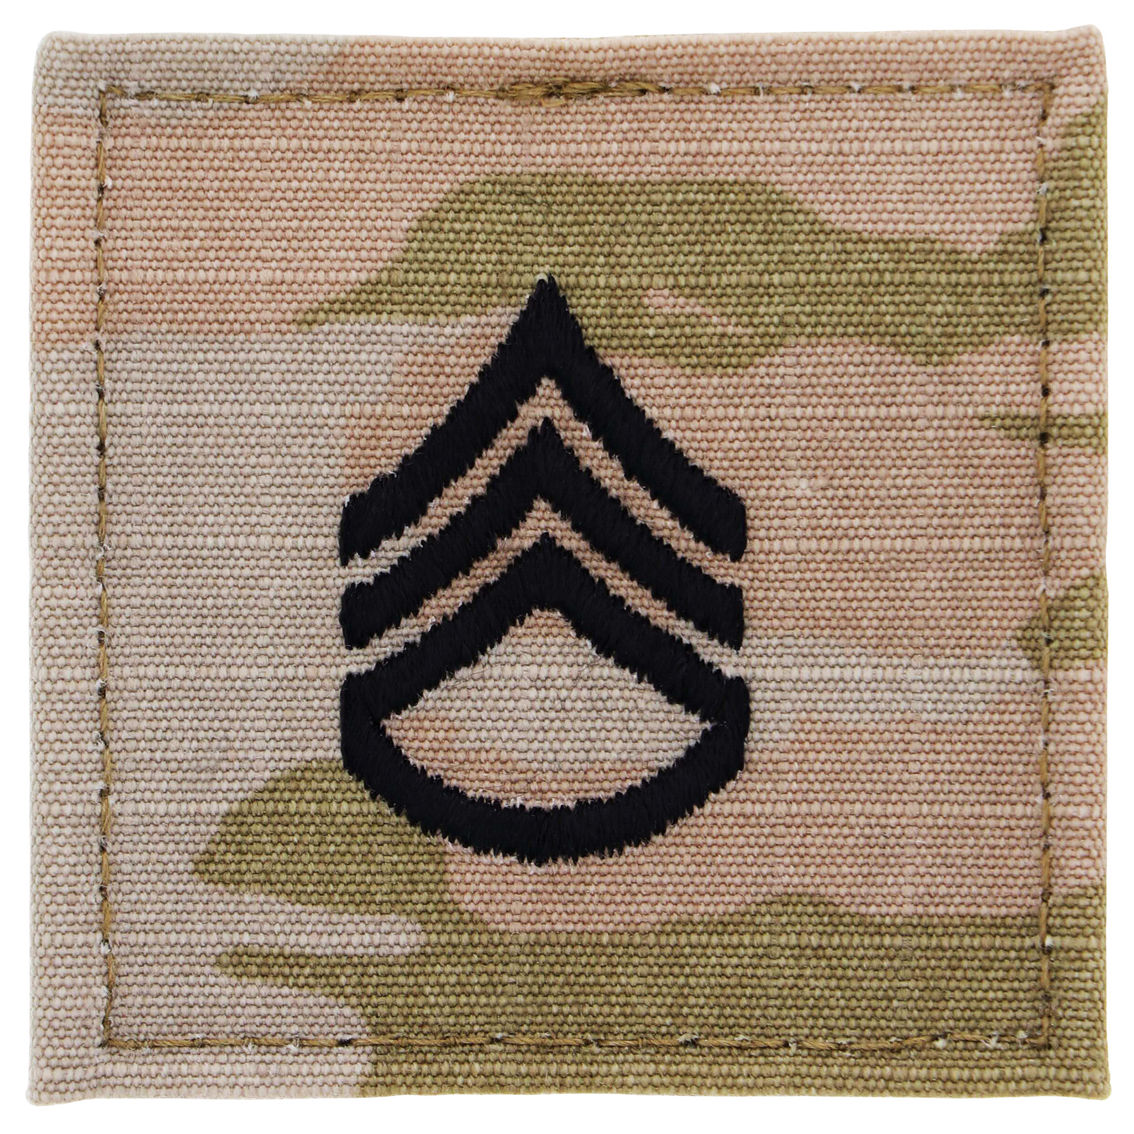 Details about   IR US Army E-6 Staff Sergeant SSG rank multicam 2x2 USA morale tactical patch